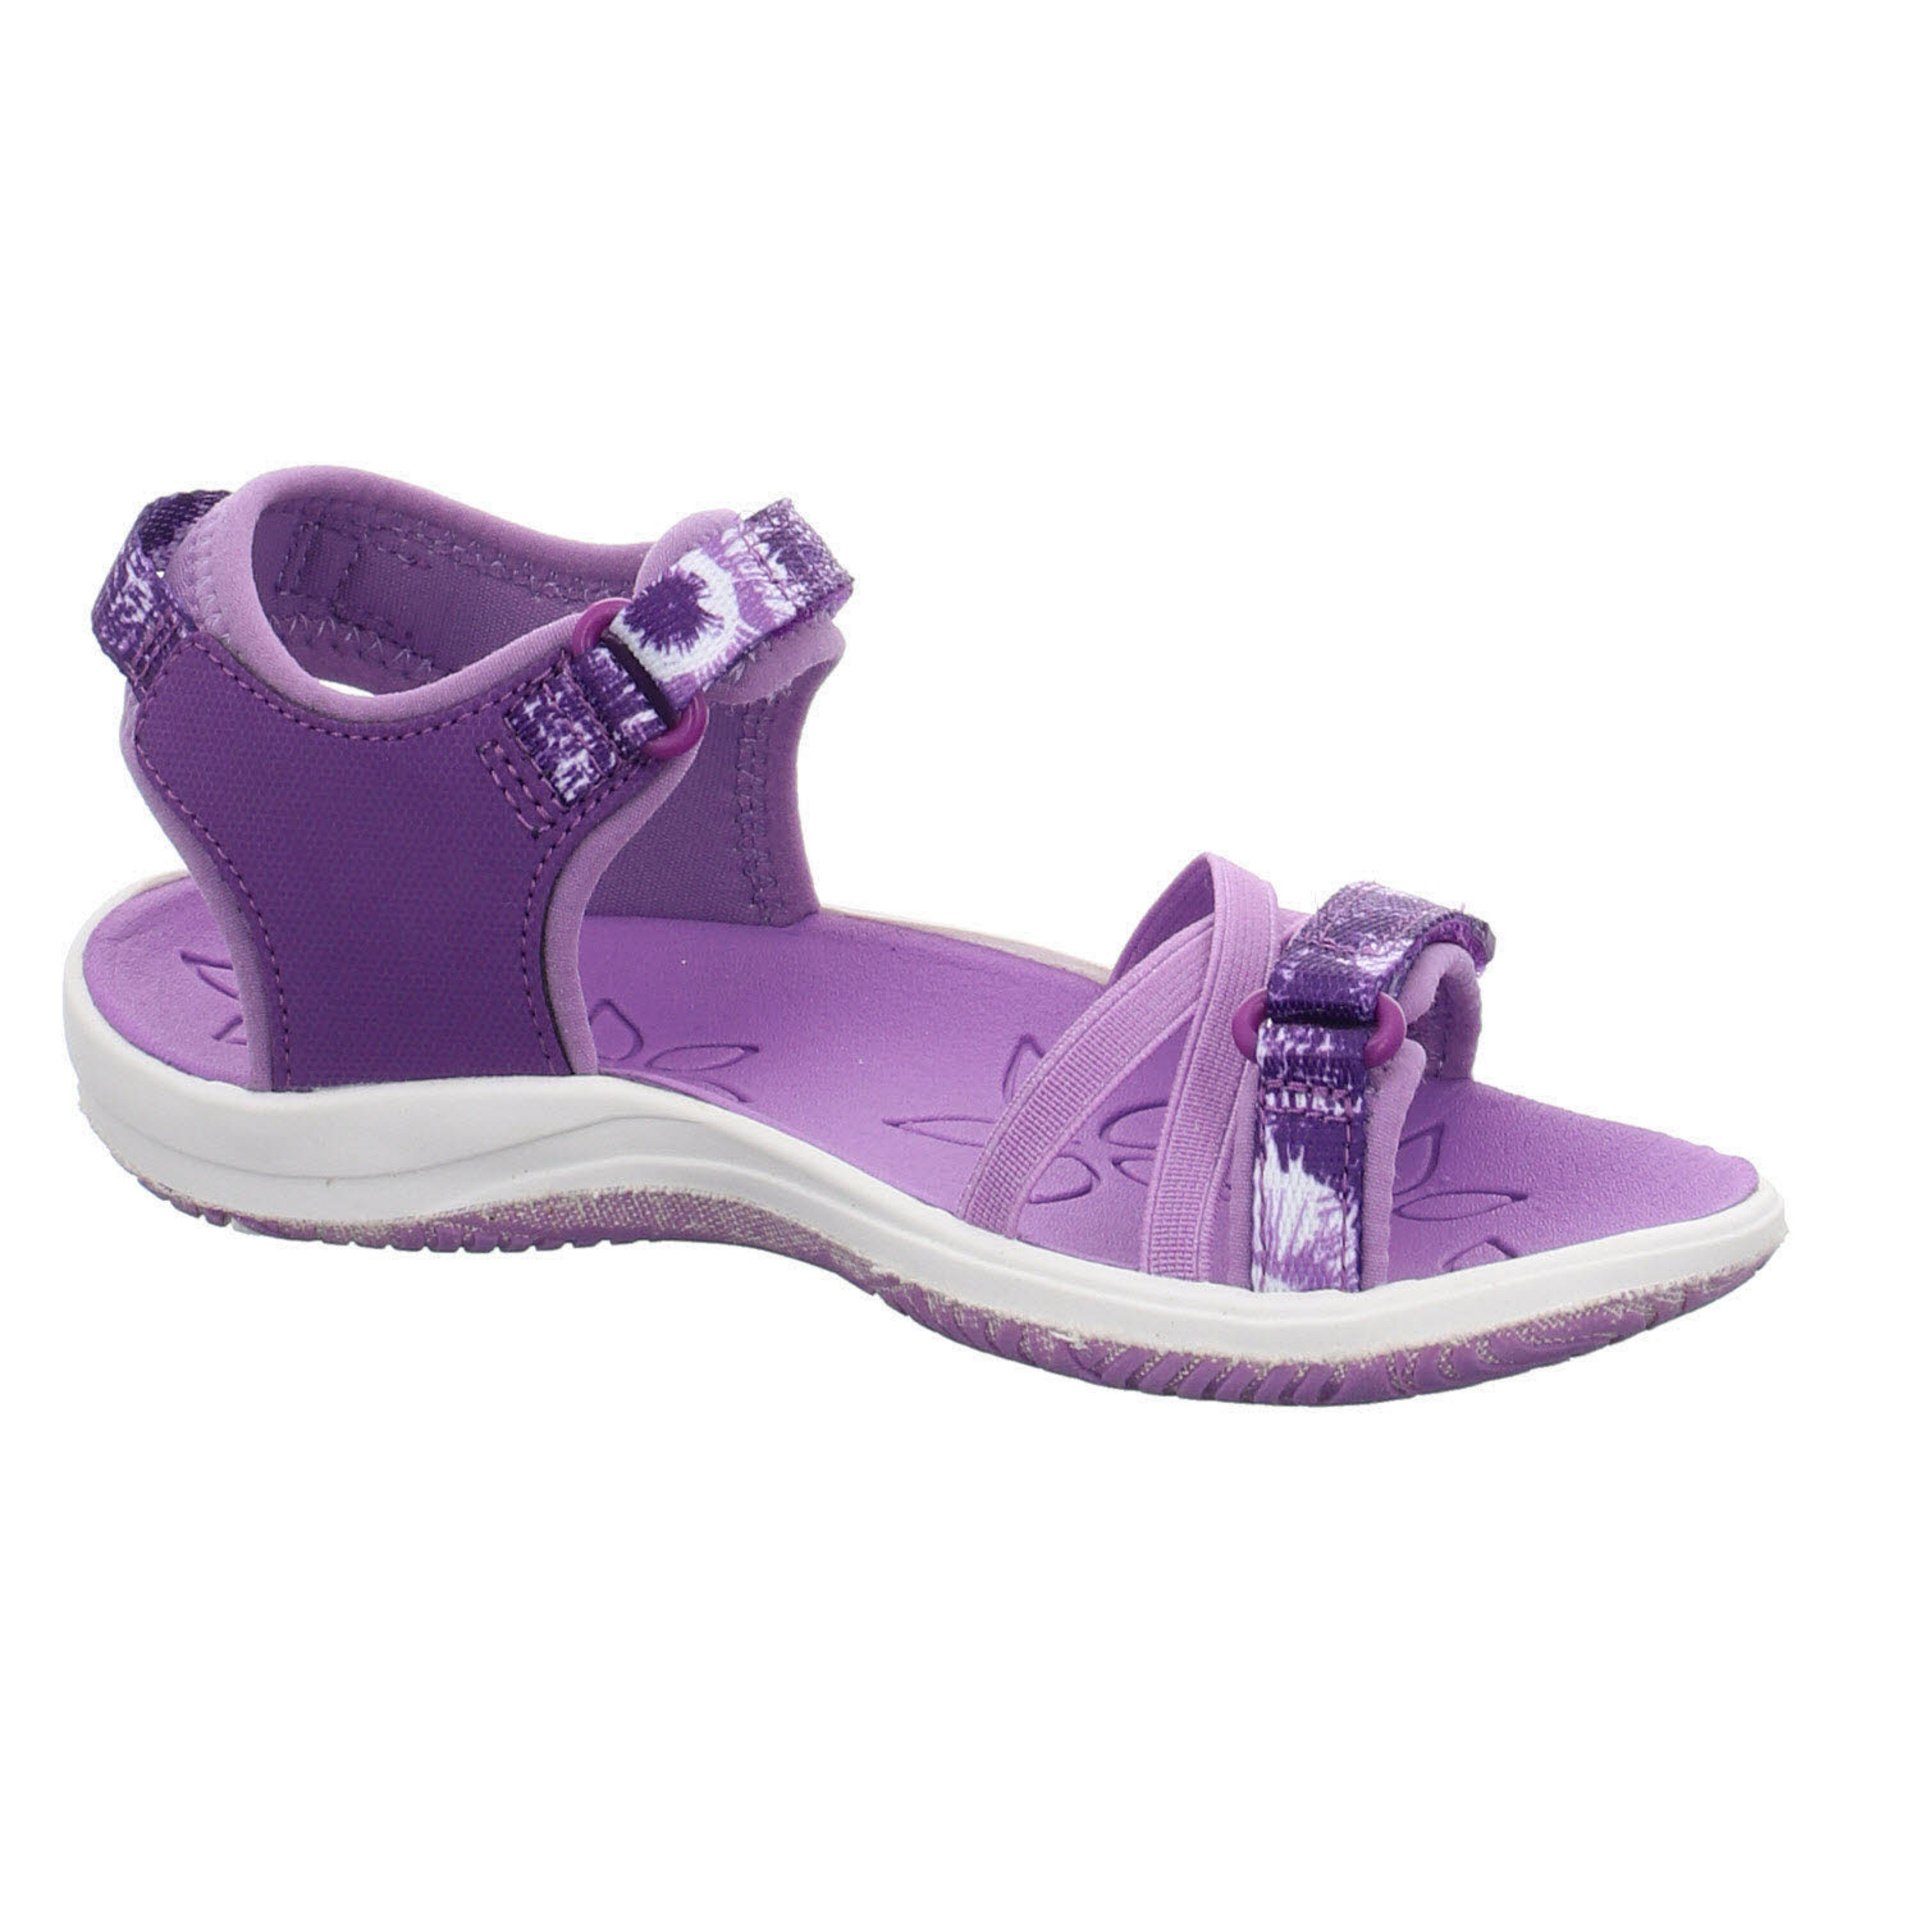 Keen Mädchen Sandalen Schuhe Verano Sandale Synthetikkombination Sandale